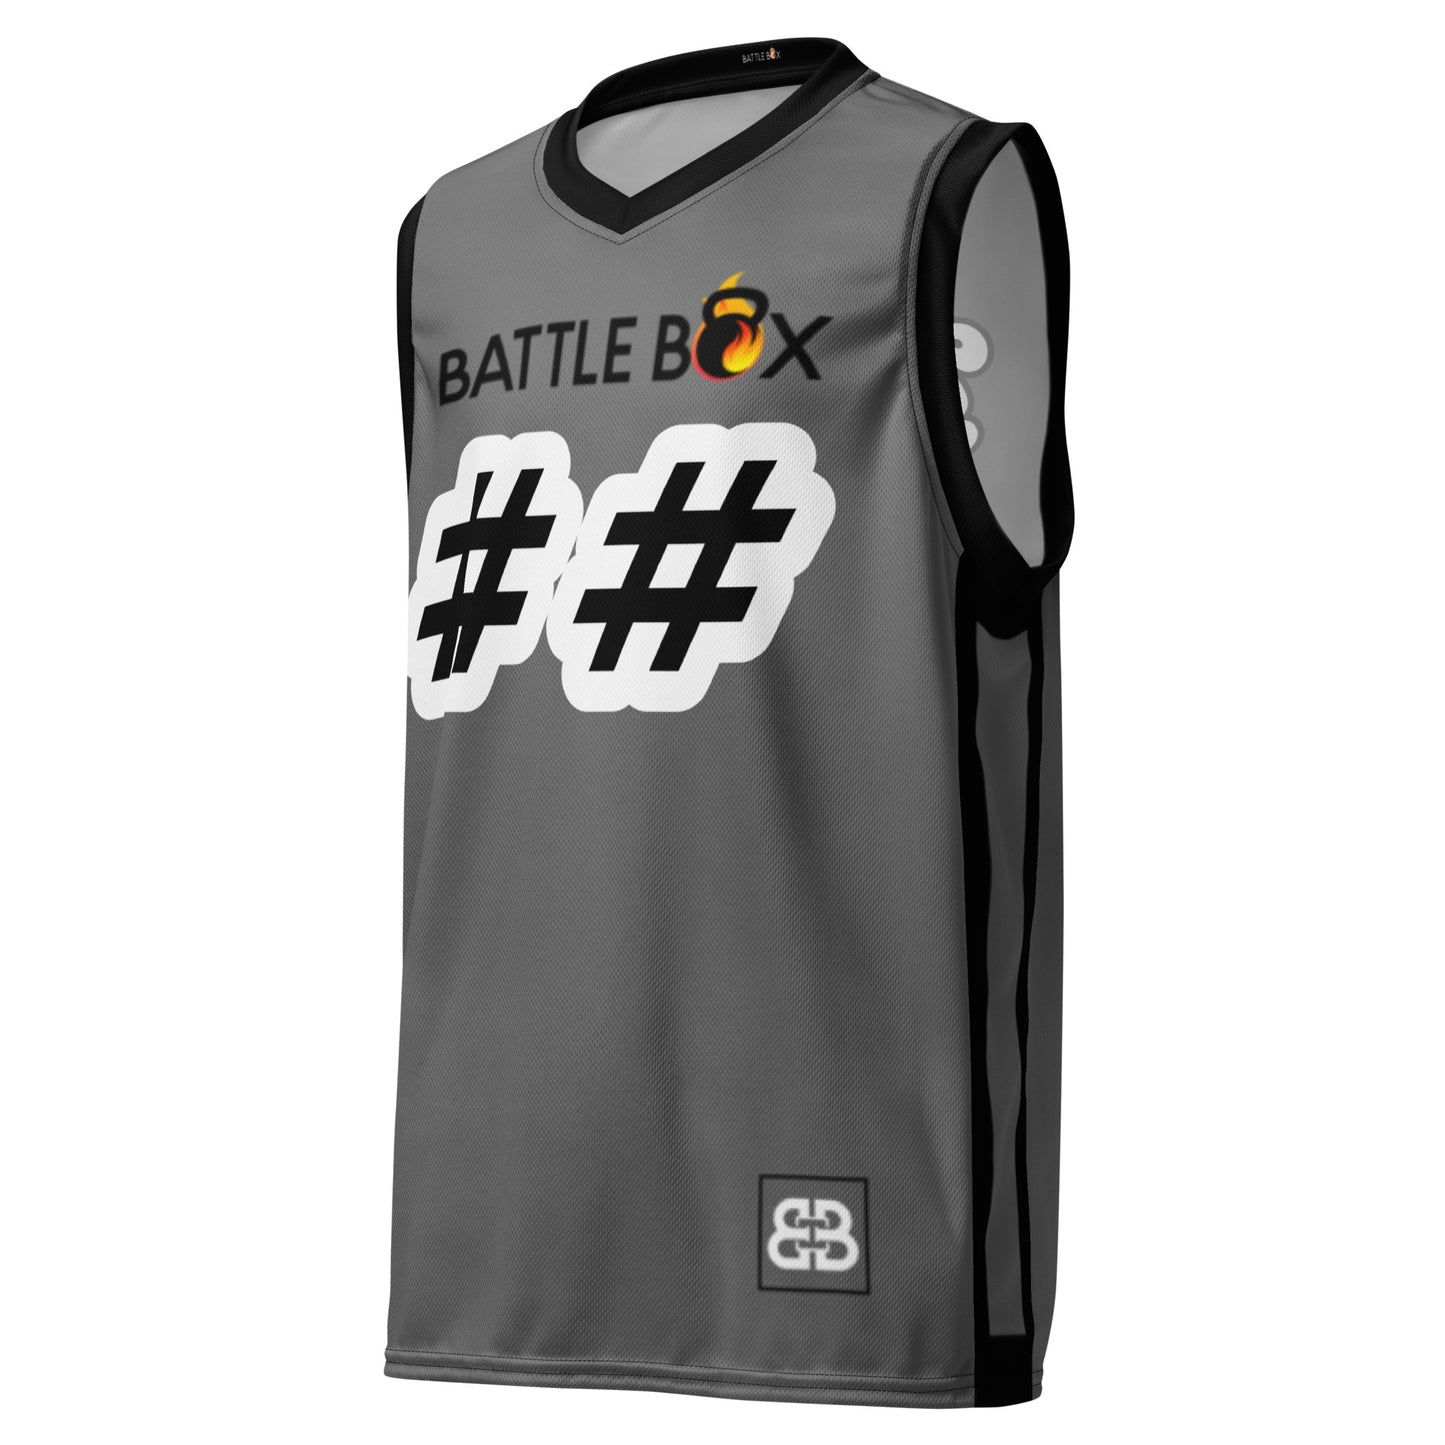 Battle Box Life Custom Unisex Gym Jersey